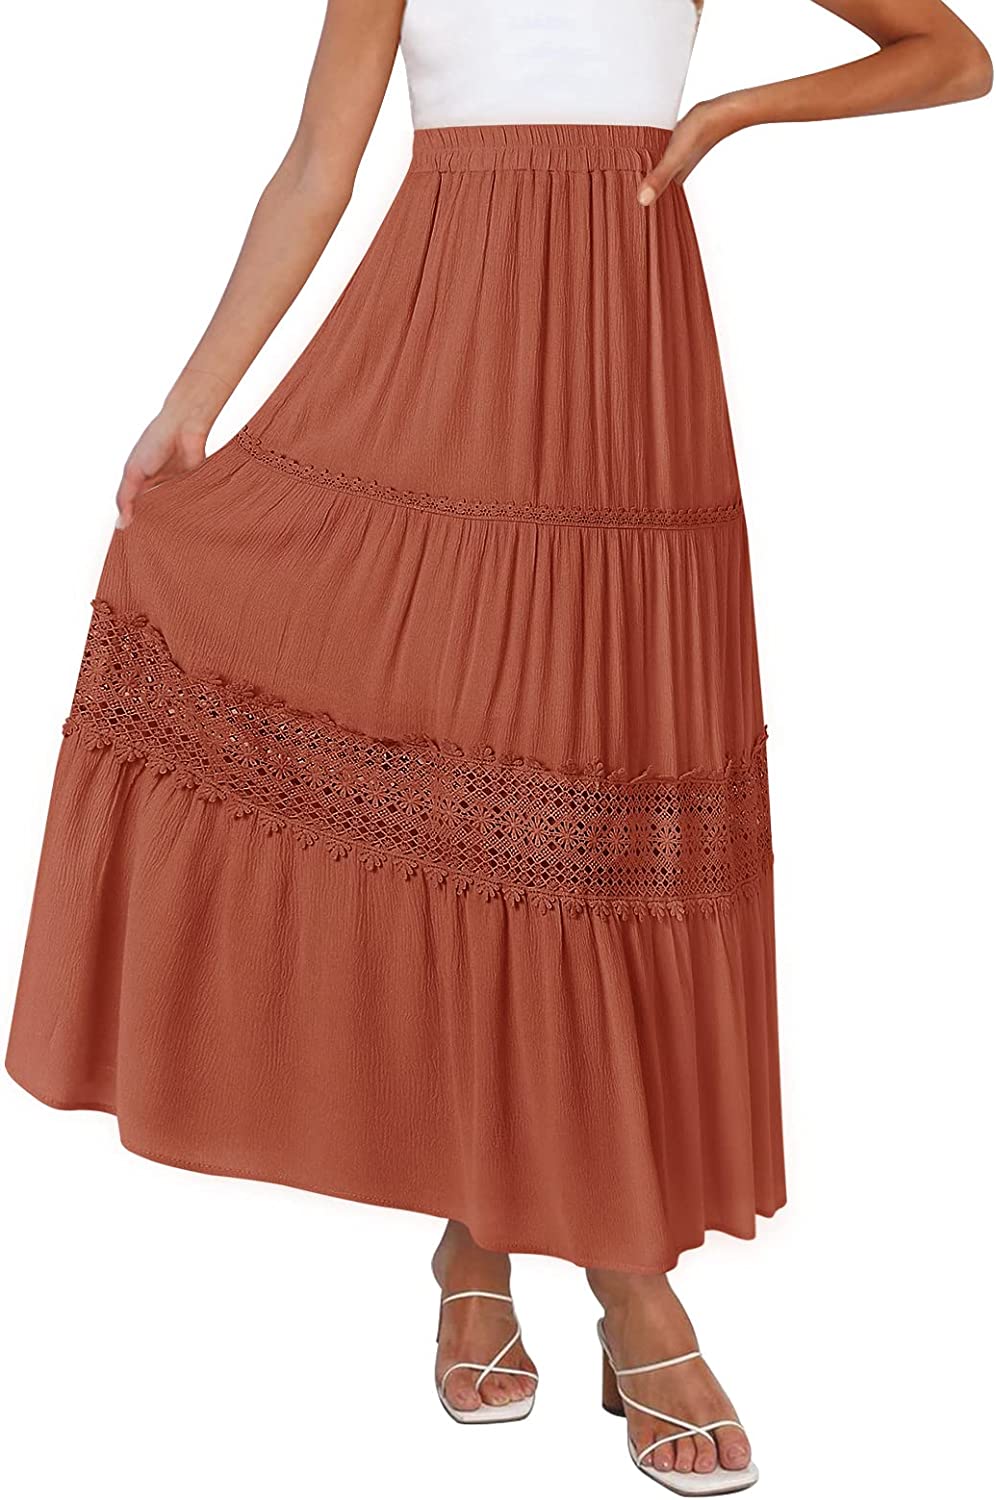 Women's Boho Elastic High Waist Pleated A-line Ruffle Lace Trim Tiered Midi Maxi Skirt with Pockets